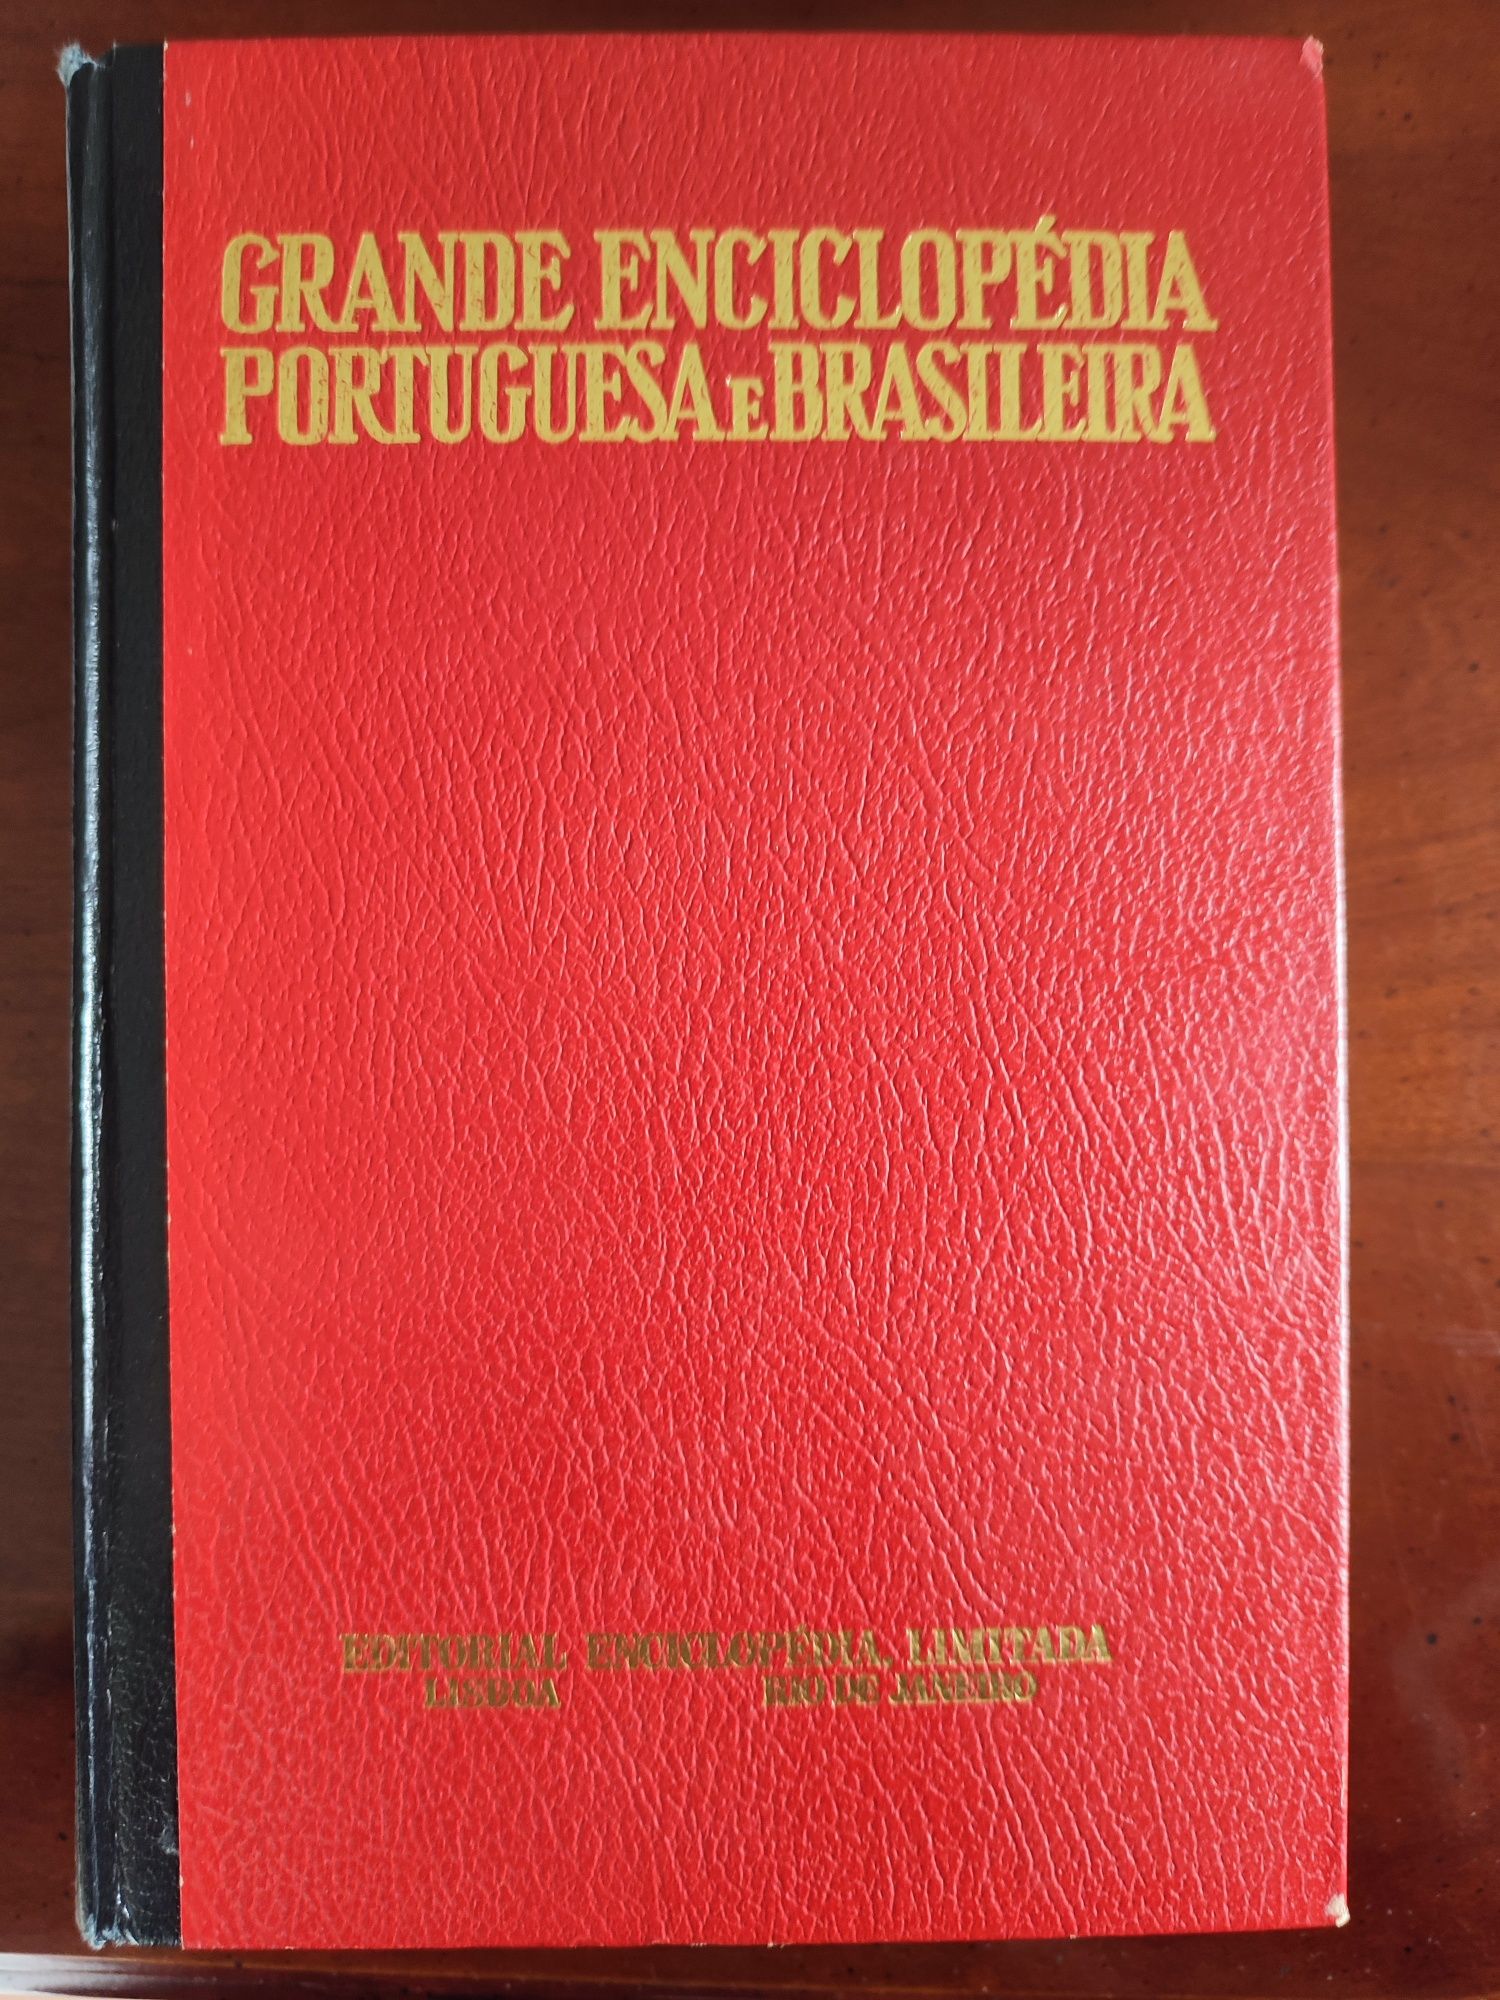 Enciclopédia completa